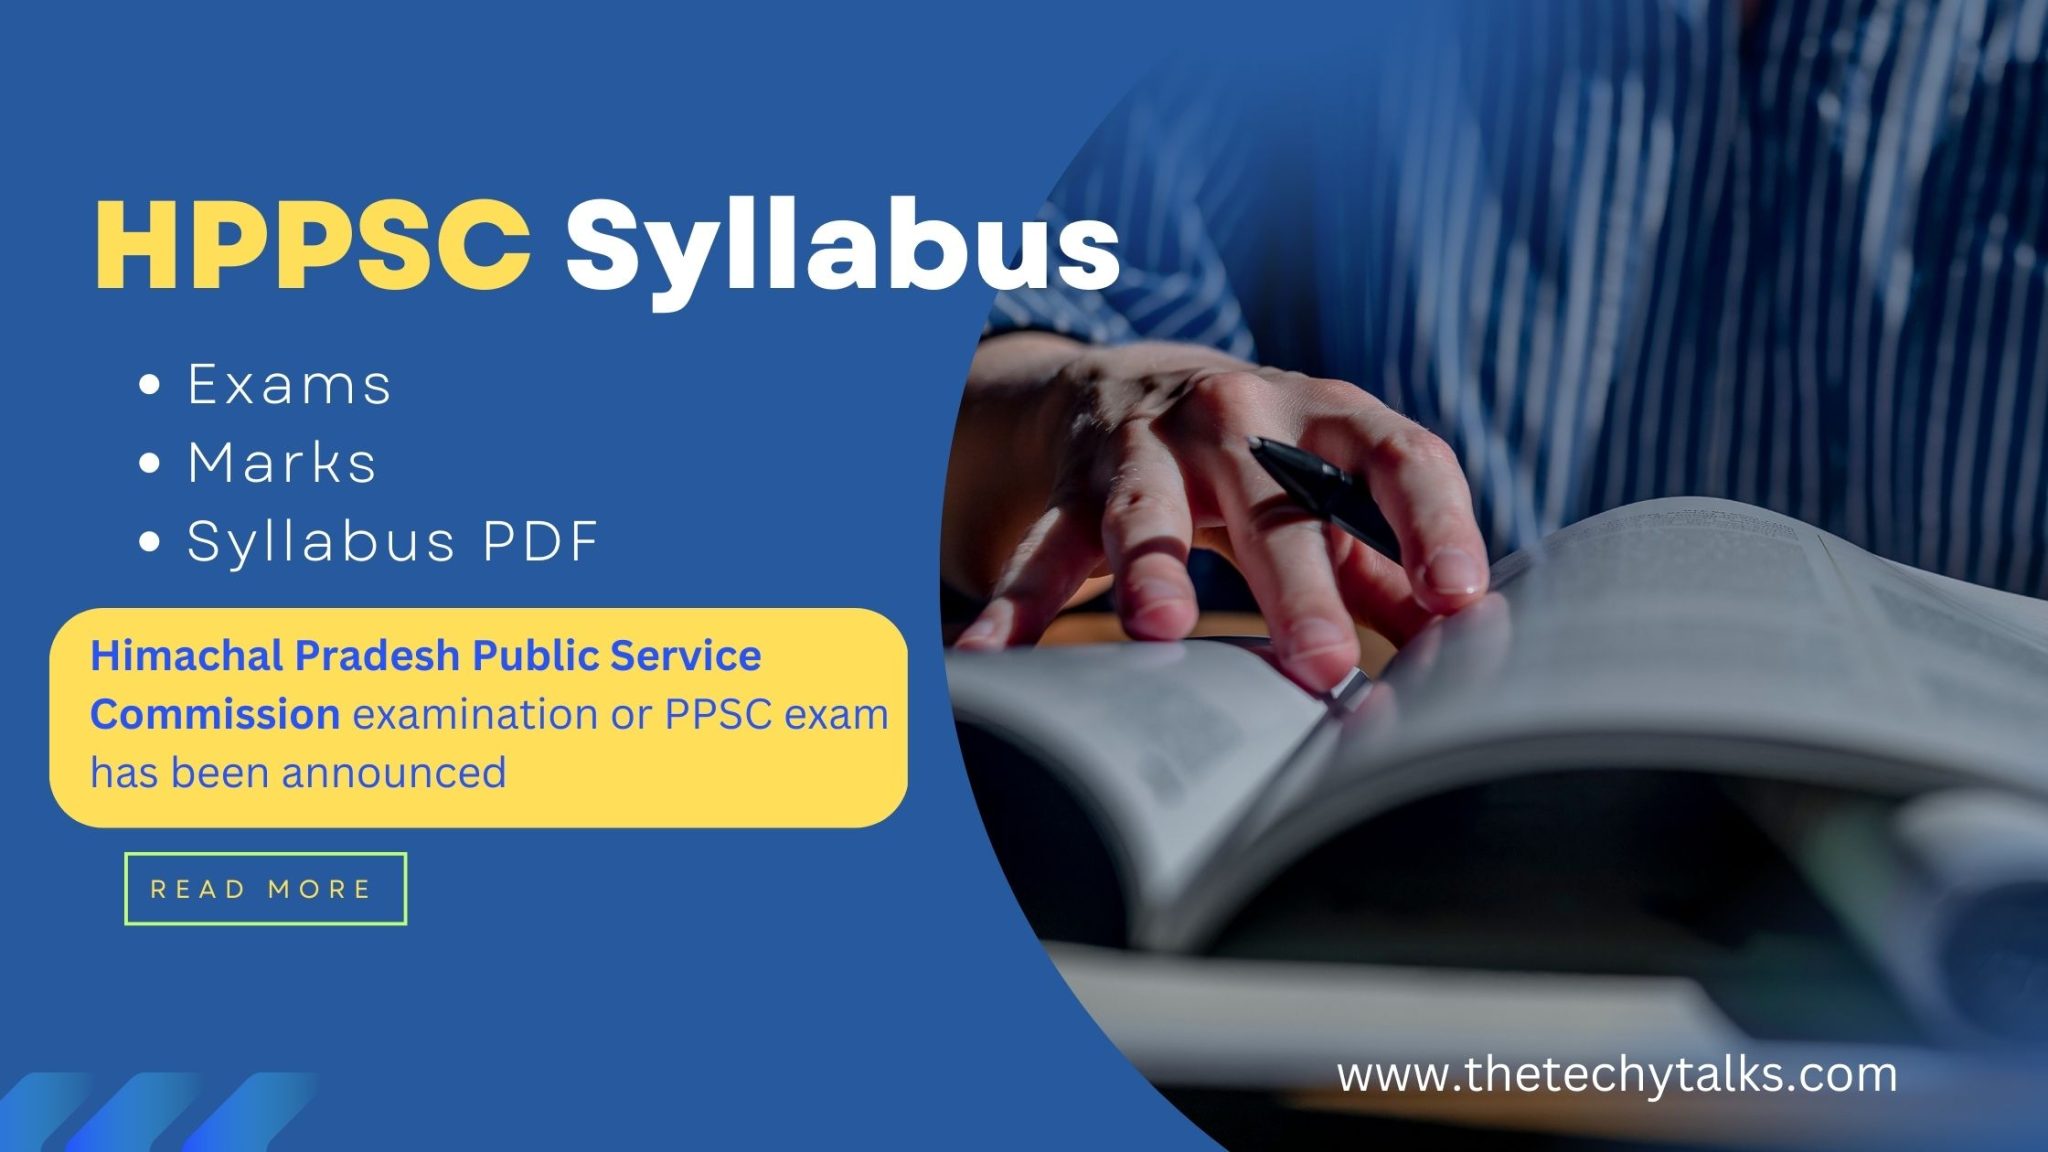 HPPSC Syllabus: Exams, Marks, Syllabus PDF Download